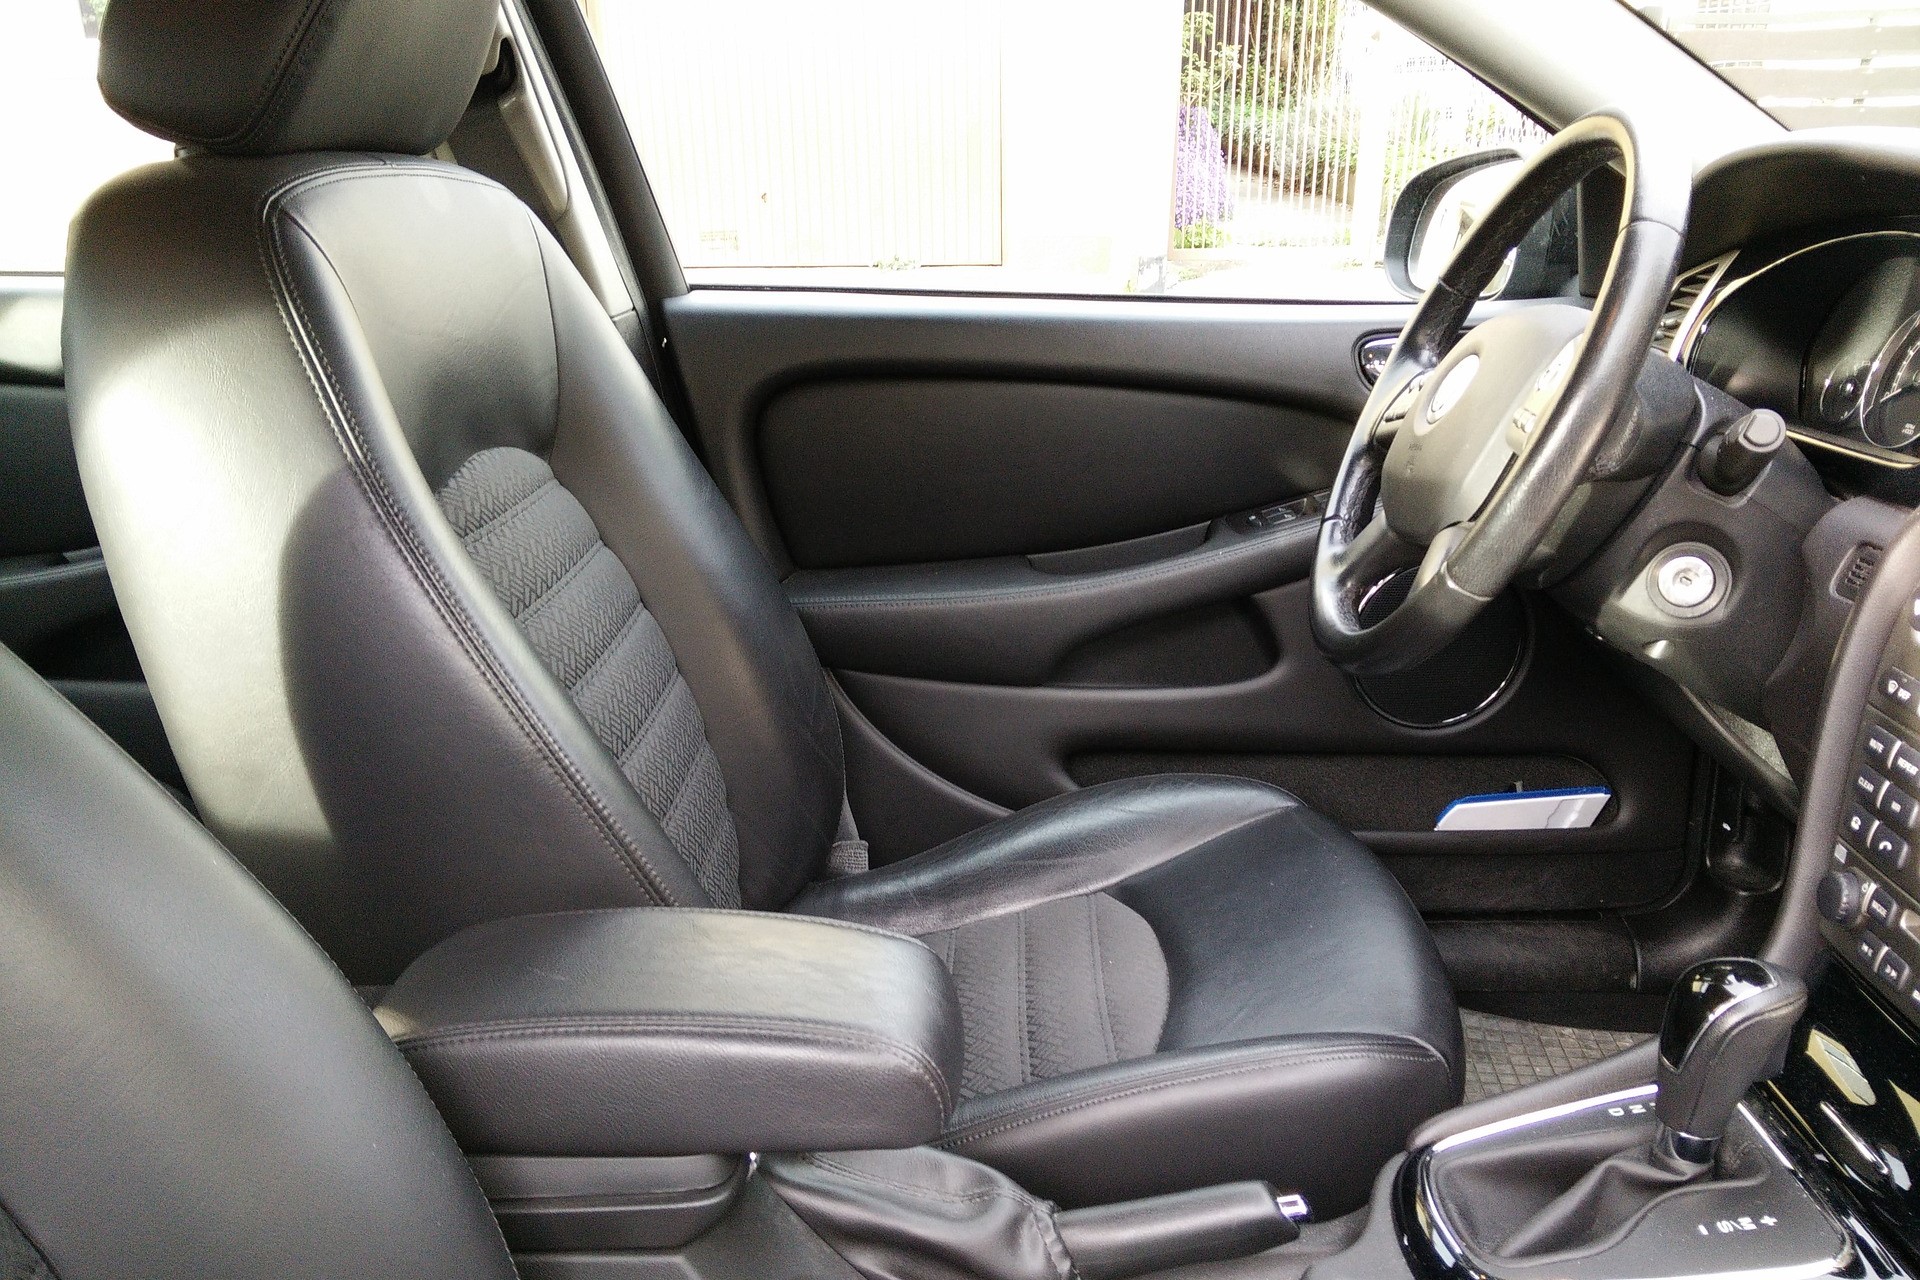 luxury limo interior